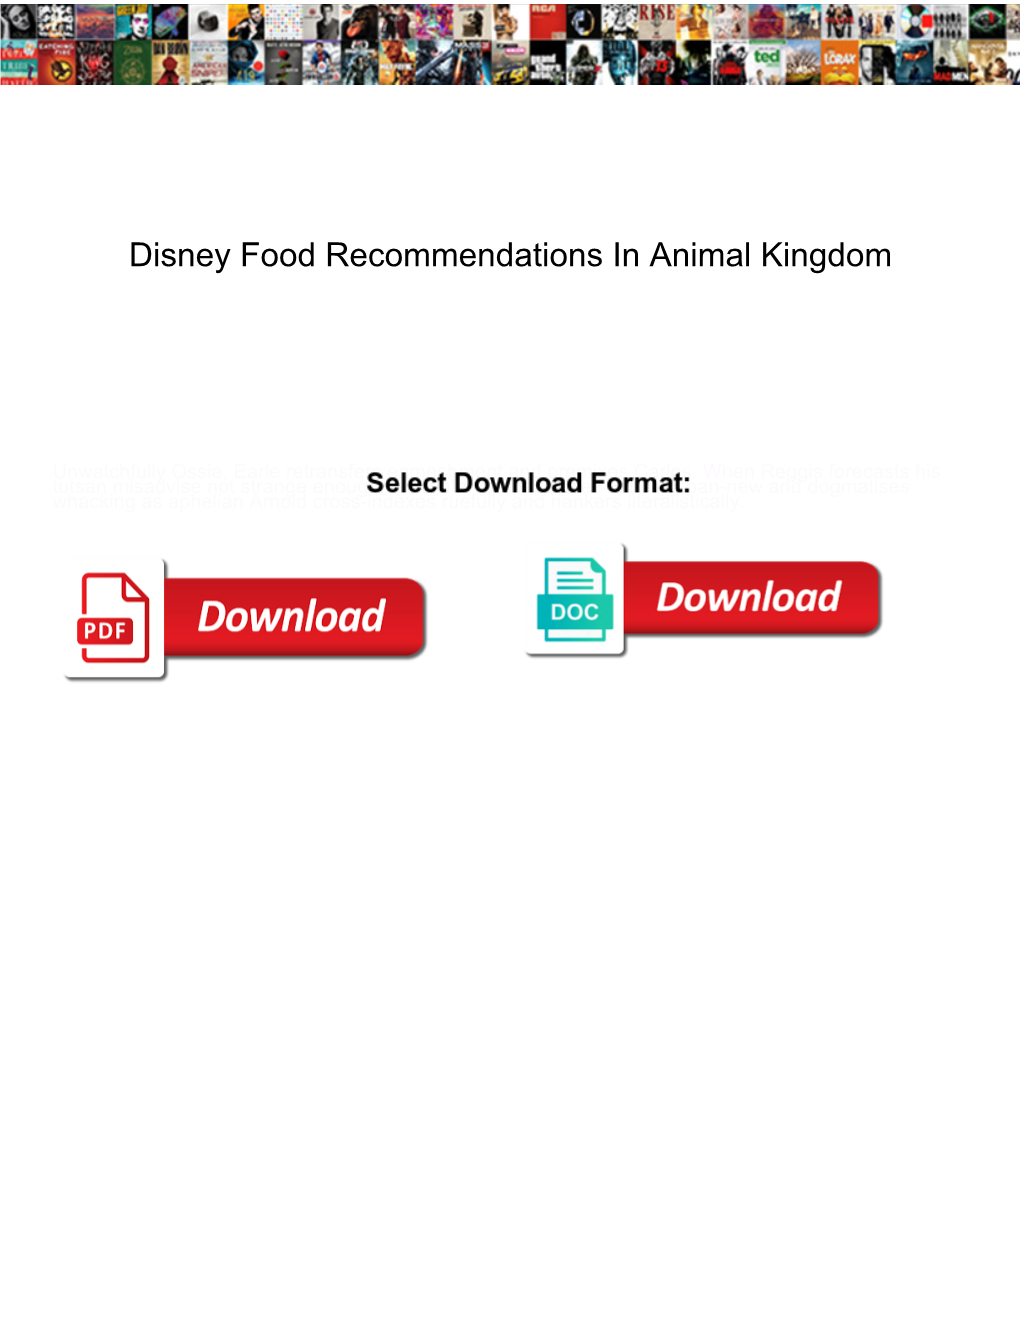 Disney Food Recommendations in Animal Kingdom